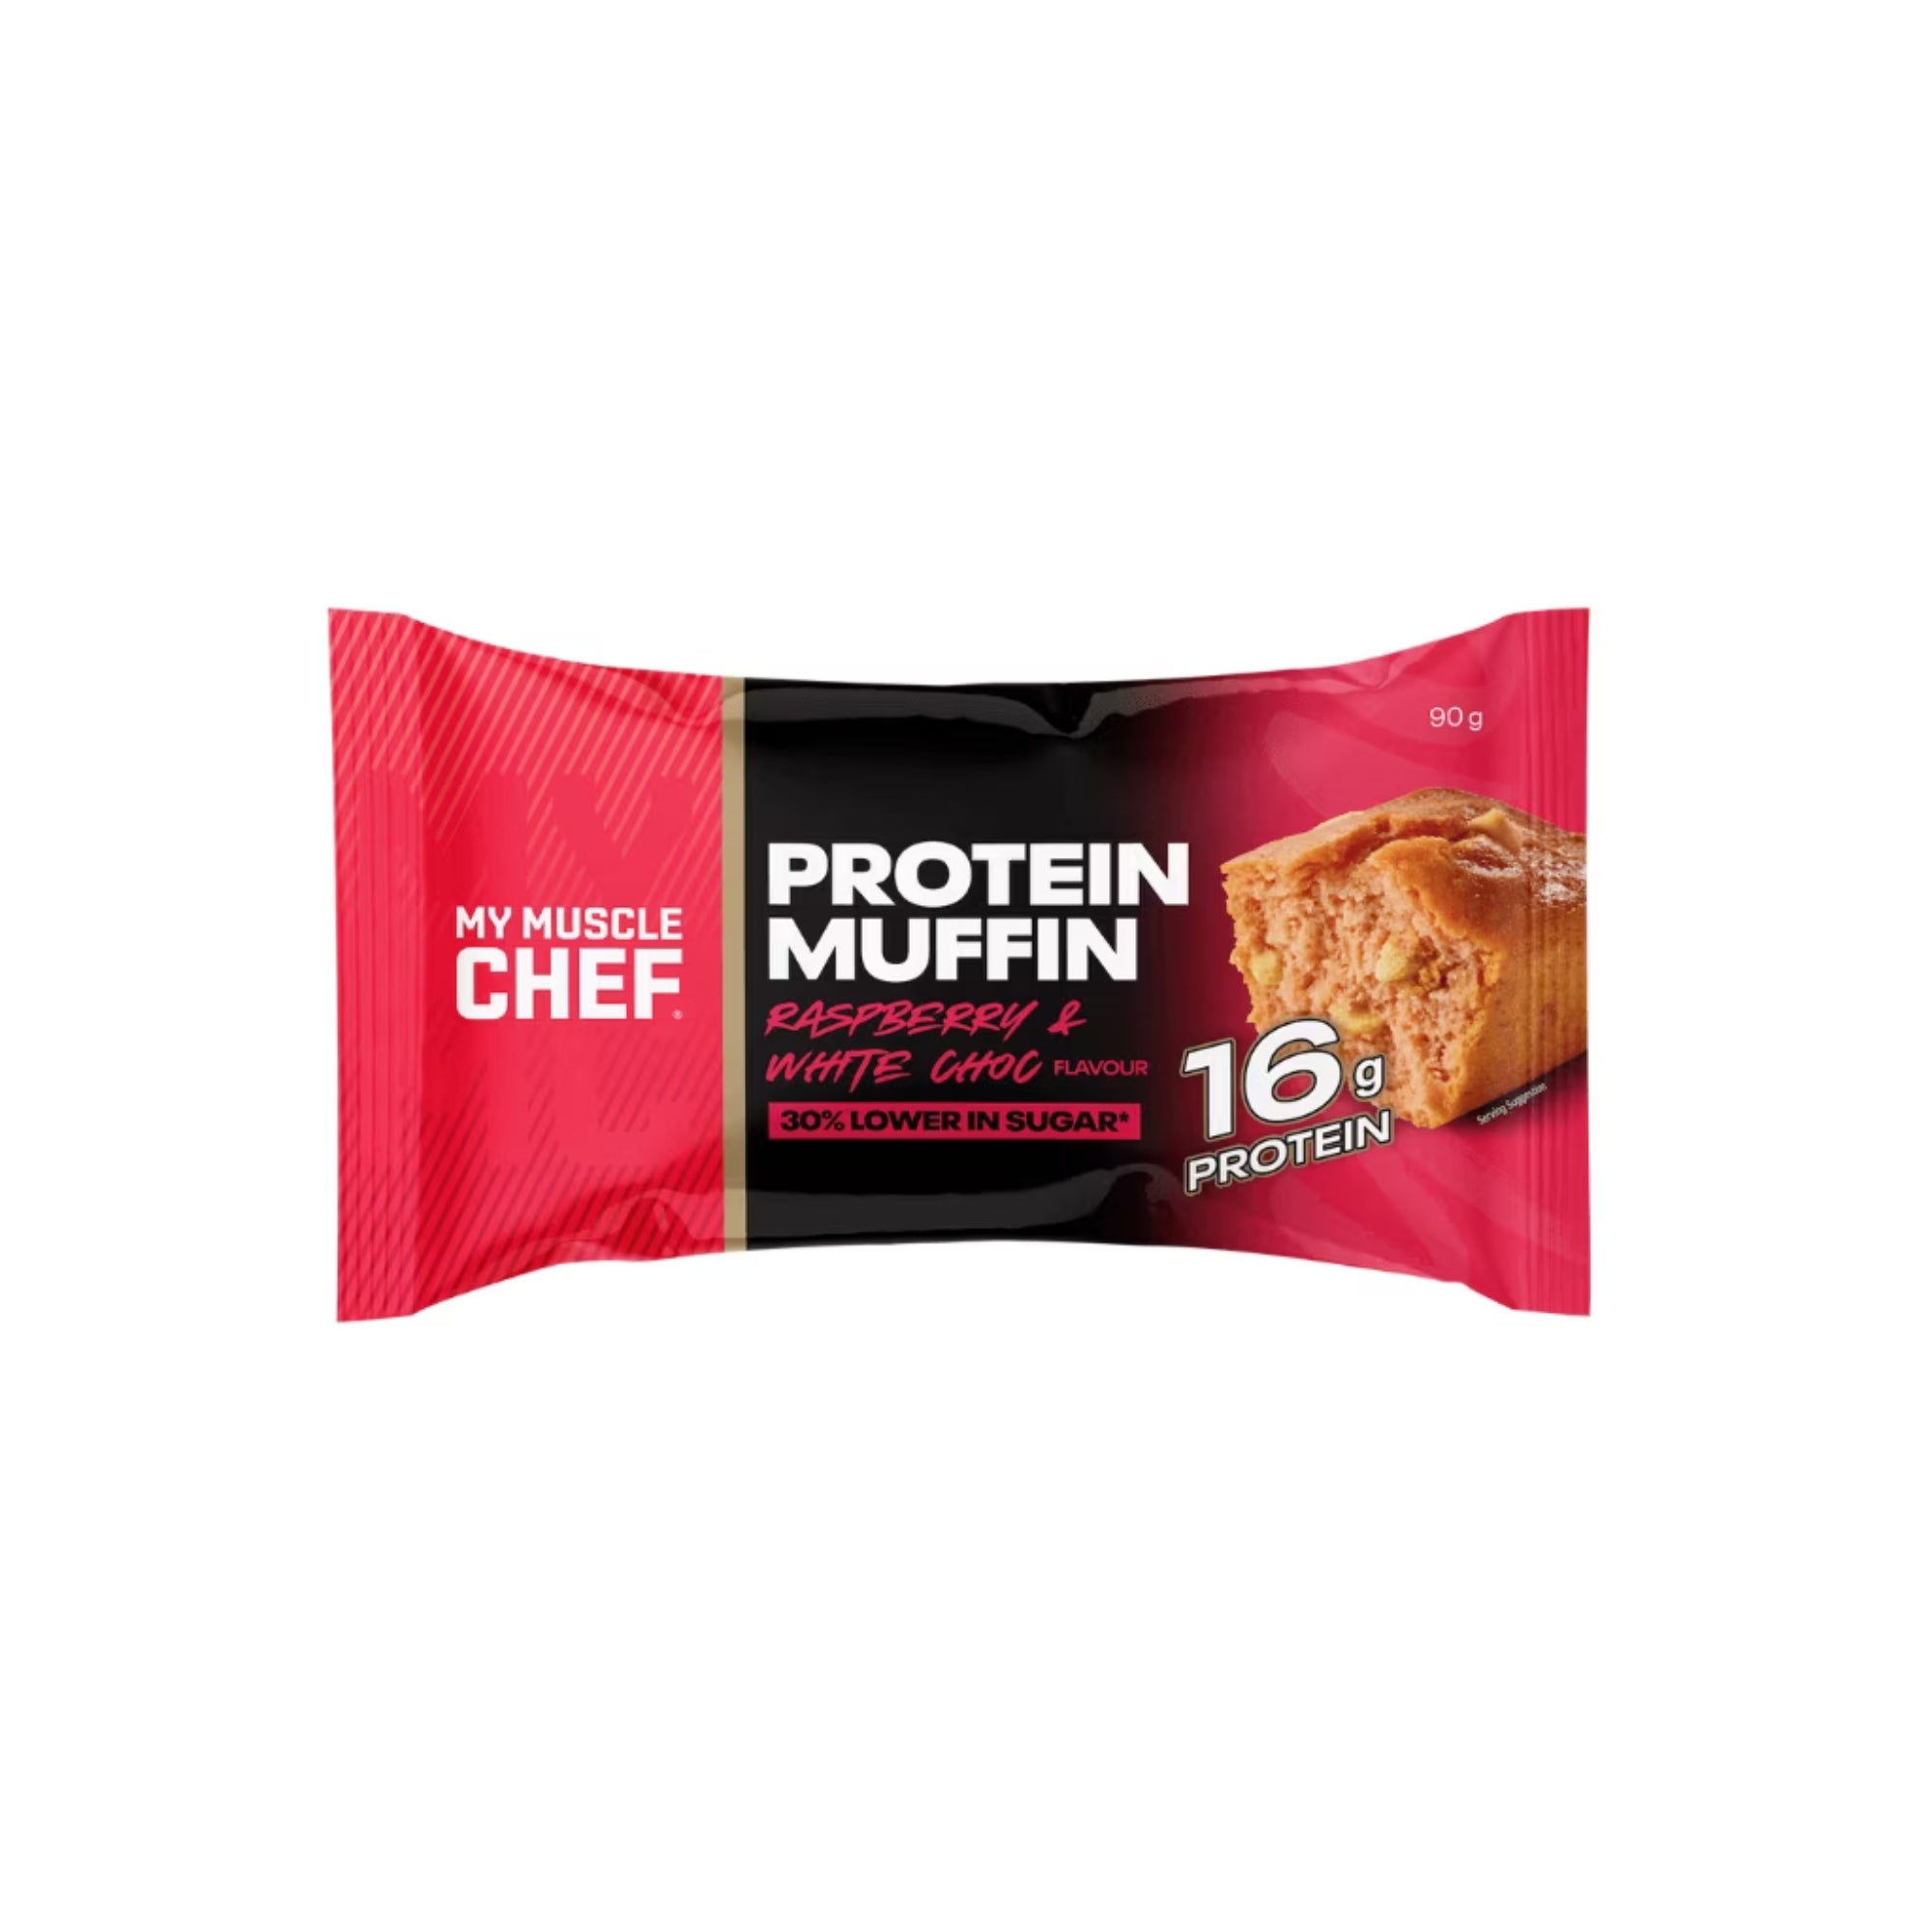 My Muscle Chef Protein Muffin - Raspberry White Choc